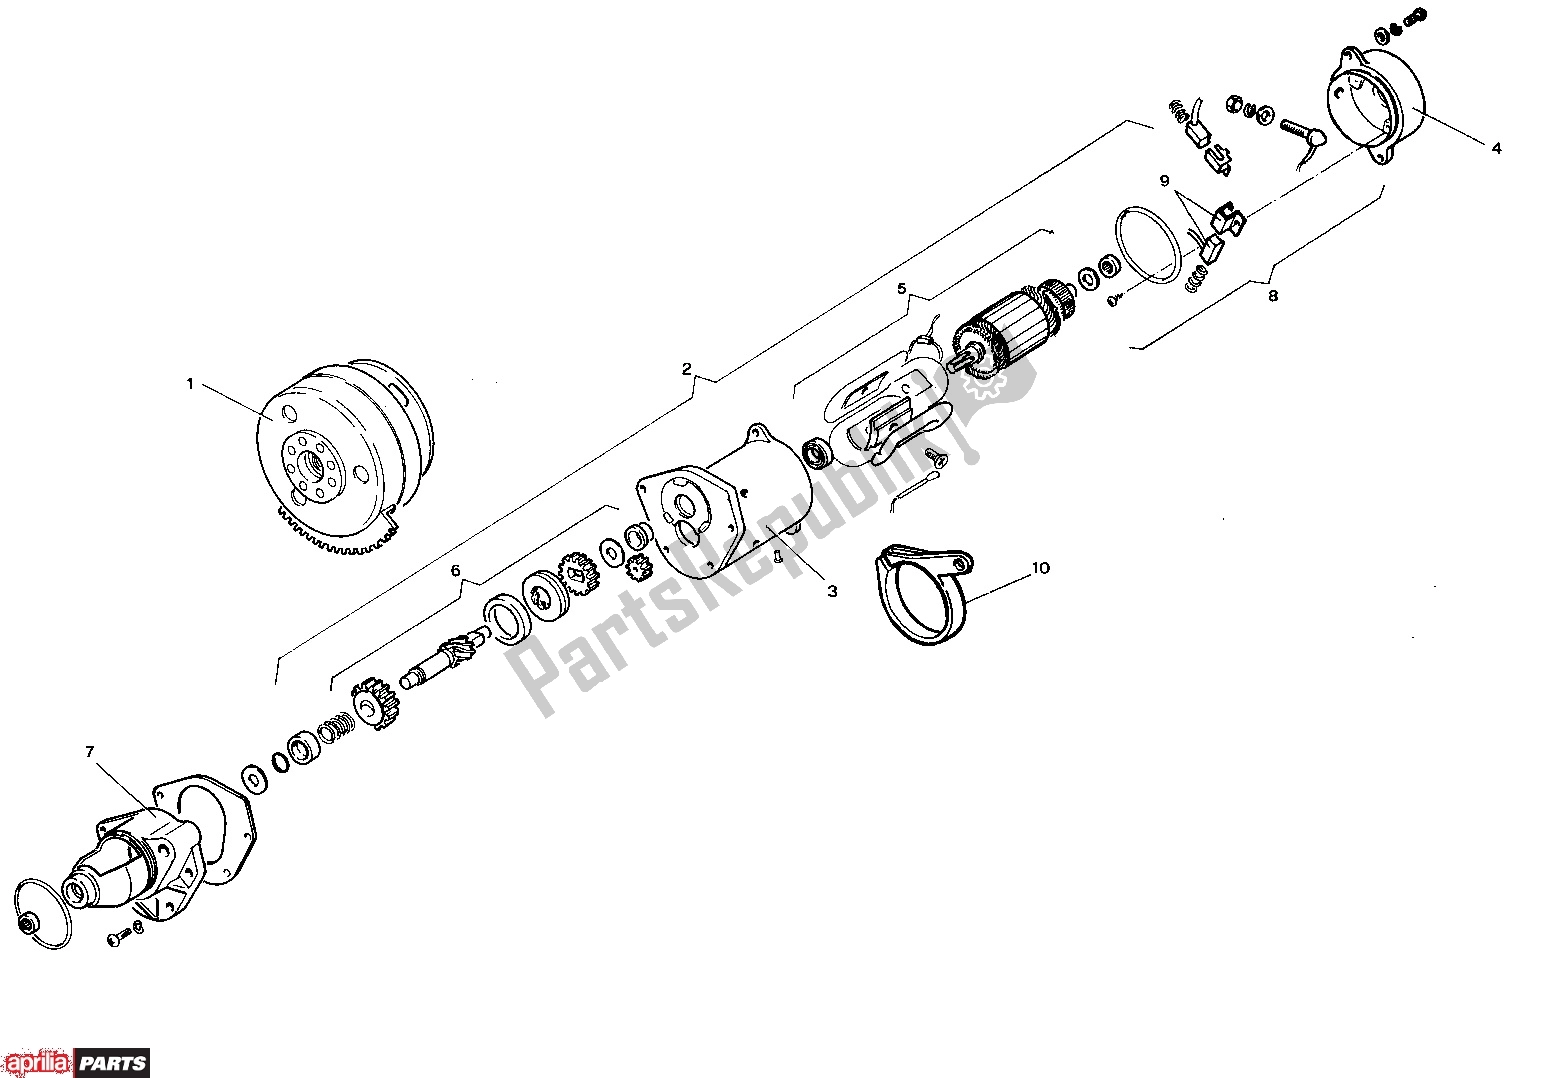 All parts for the Starter of the Aprilia AF1 308 50 1989